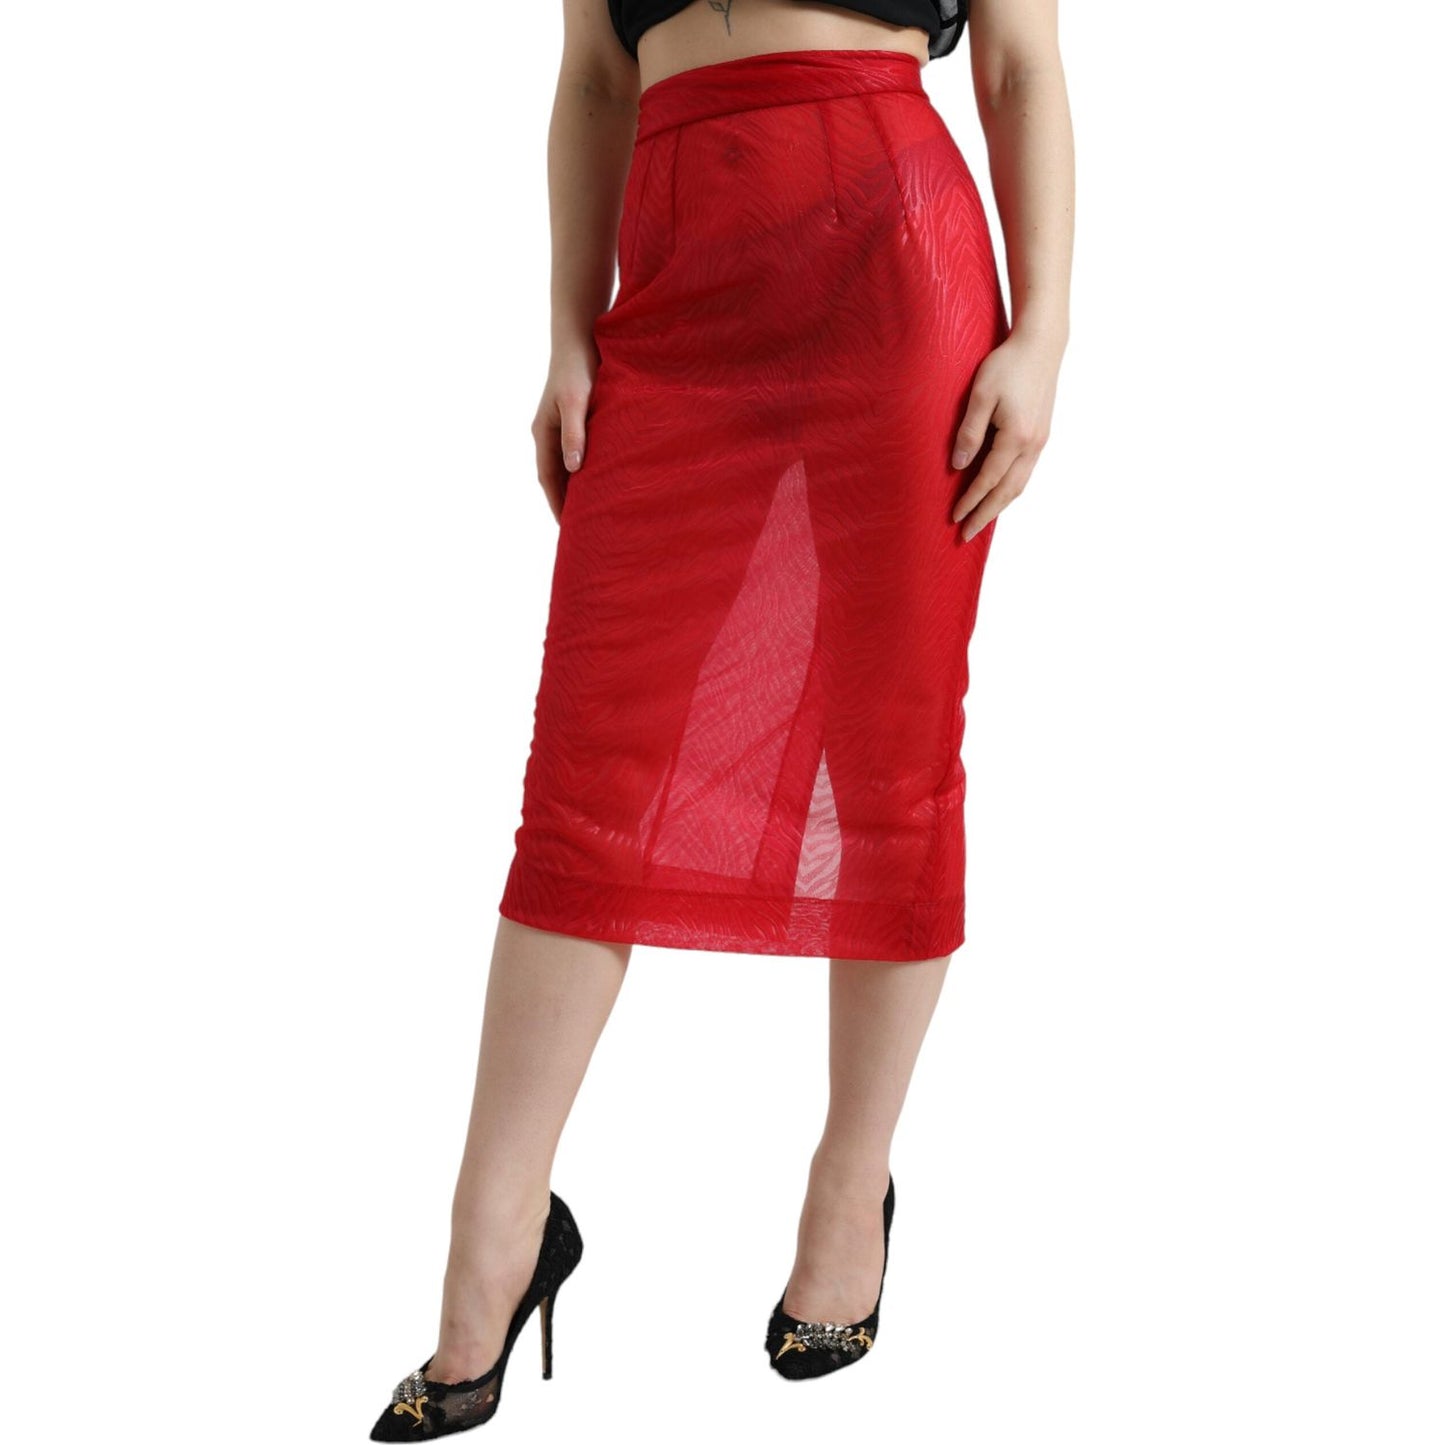 Dolce & Gabbana Chic Red High Waist Sheer Midi Skirt red-sheer-high-waist-pencil-cut-midi-skirt 465A1819-bg-scaled-e6848c43-44a.jpg